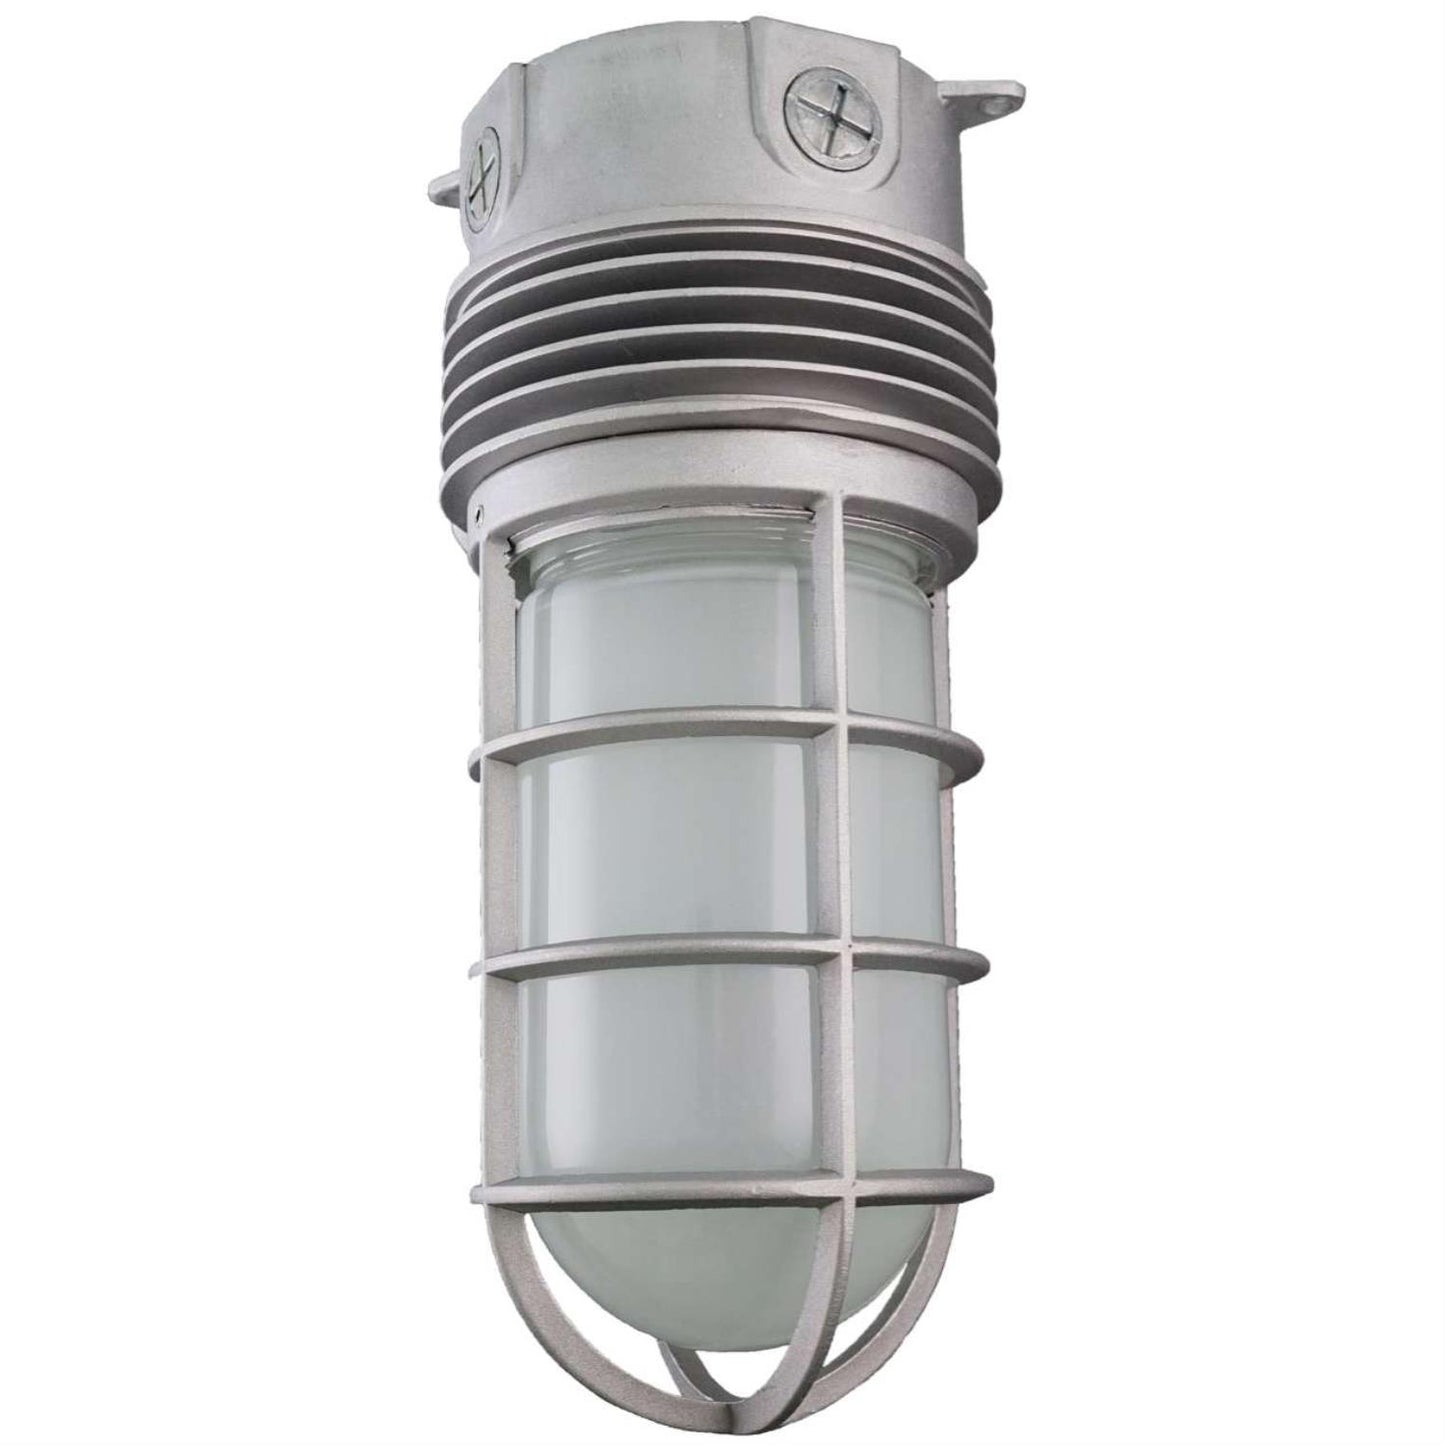 Sunlite 88148-SU LED Vapor Proof Jar Ceiling Fixture, 12 Watts, 900 Lumens, Vandal Proof, Weather Tight, 110-277 Volt, Gray Finish, ETL Listed, IP65, 50K - Super White 1 Pack